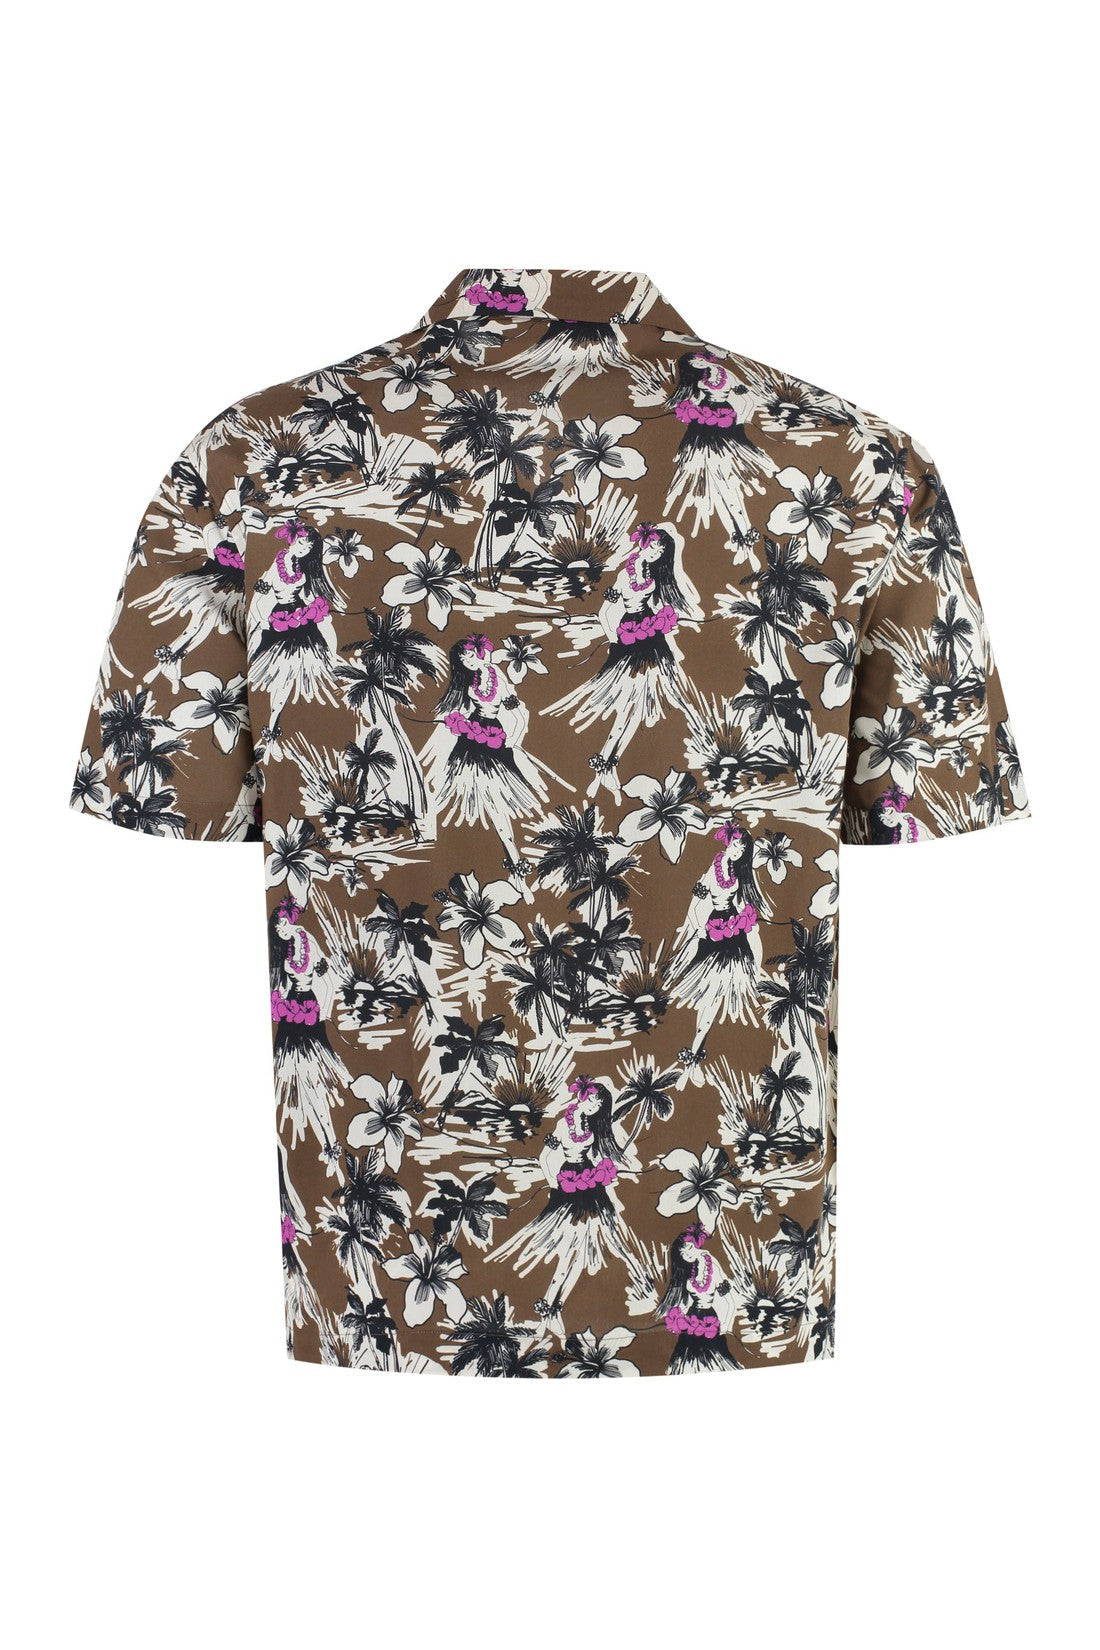 Palm Angels-OUTLET-SALE-Printed short sleeved shirt-ARCHIVIST